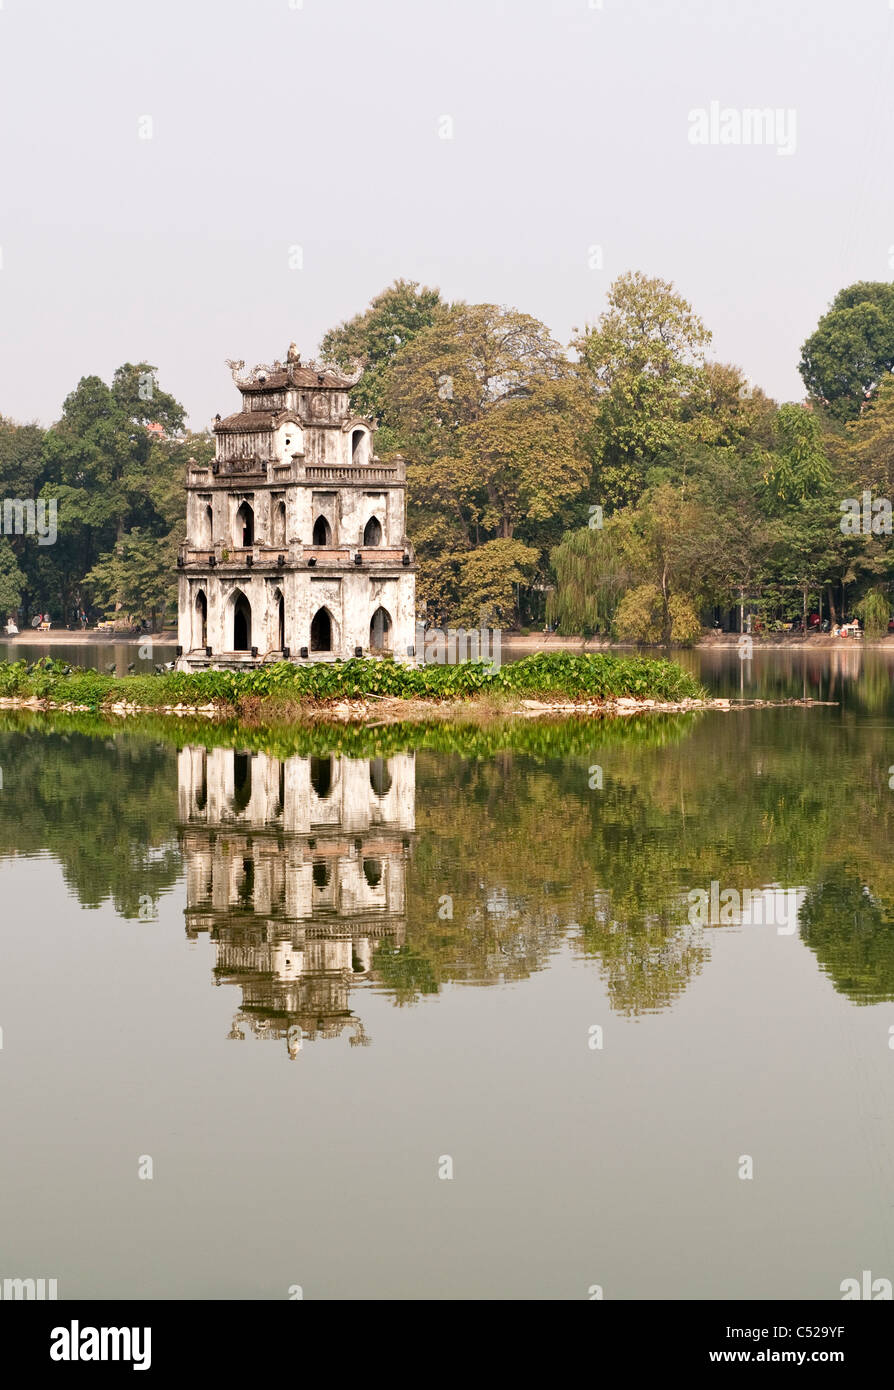 The historic Tortoise Tower, Thap Rua, reflected in the waters of Hoan Kiem Lake, Hanoi, Vietnam Stock Photo